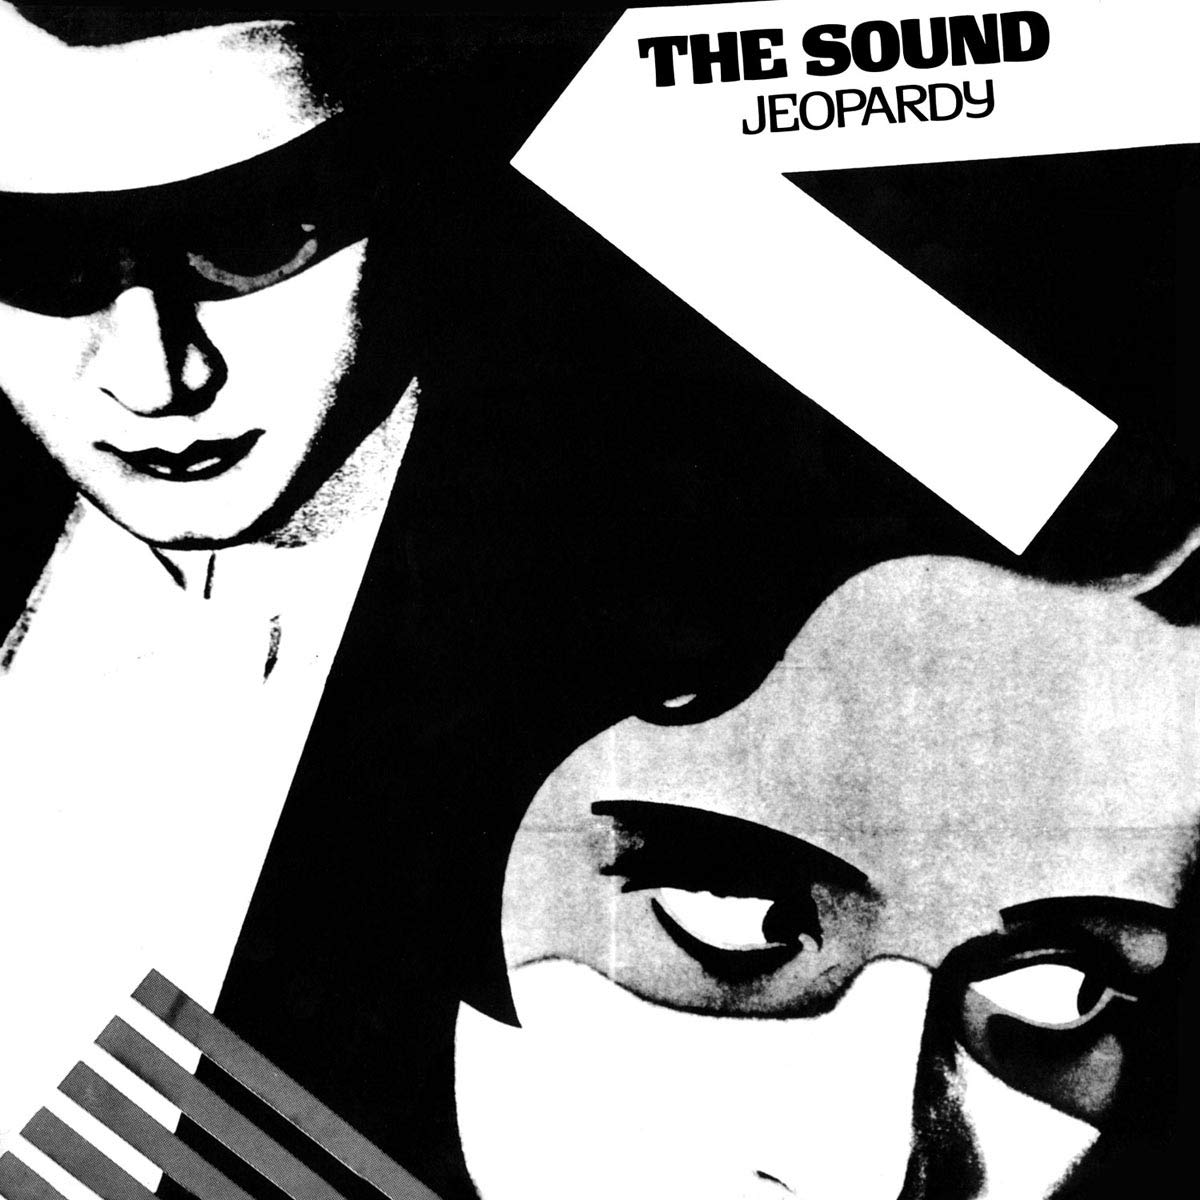 The Sound "Jeopardy" LP